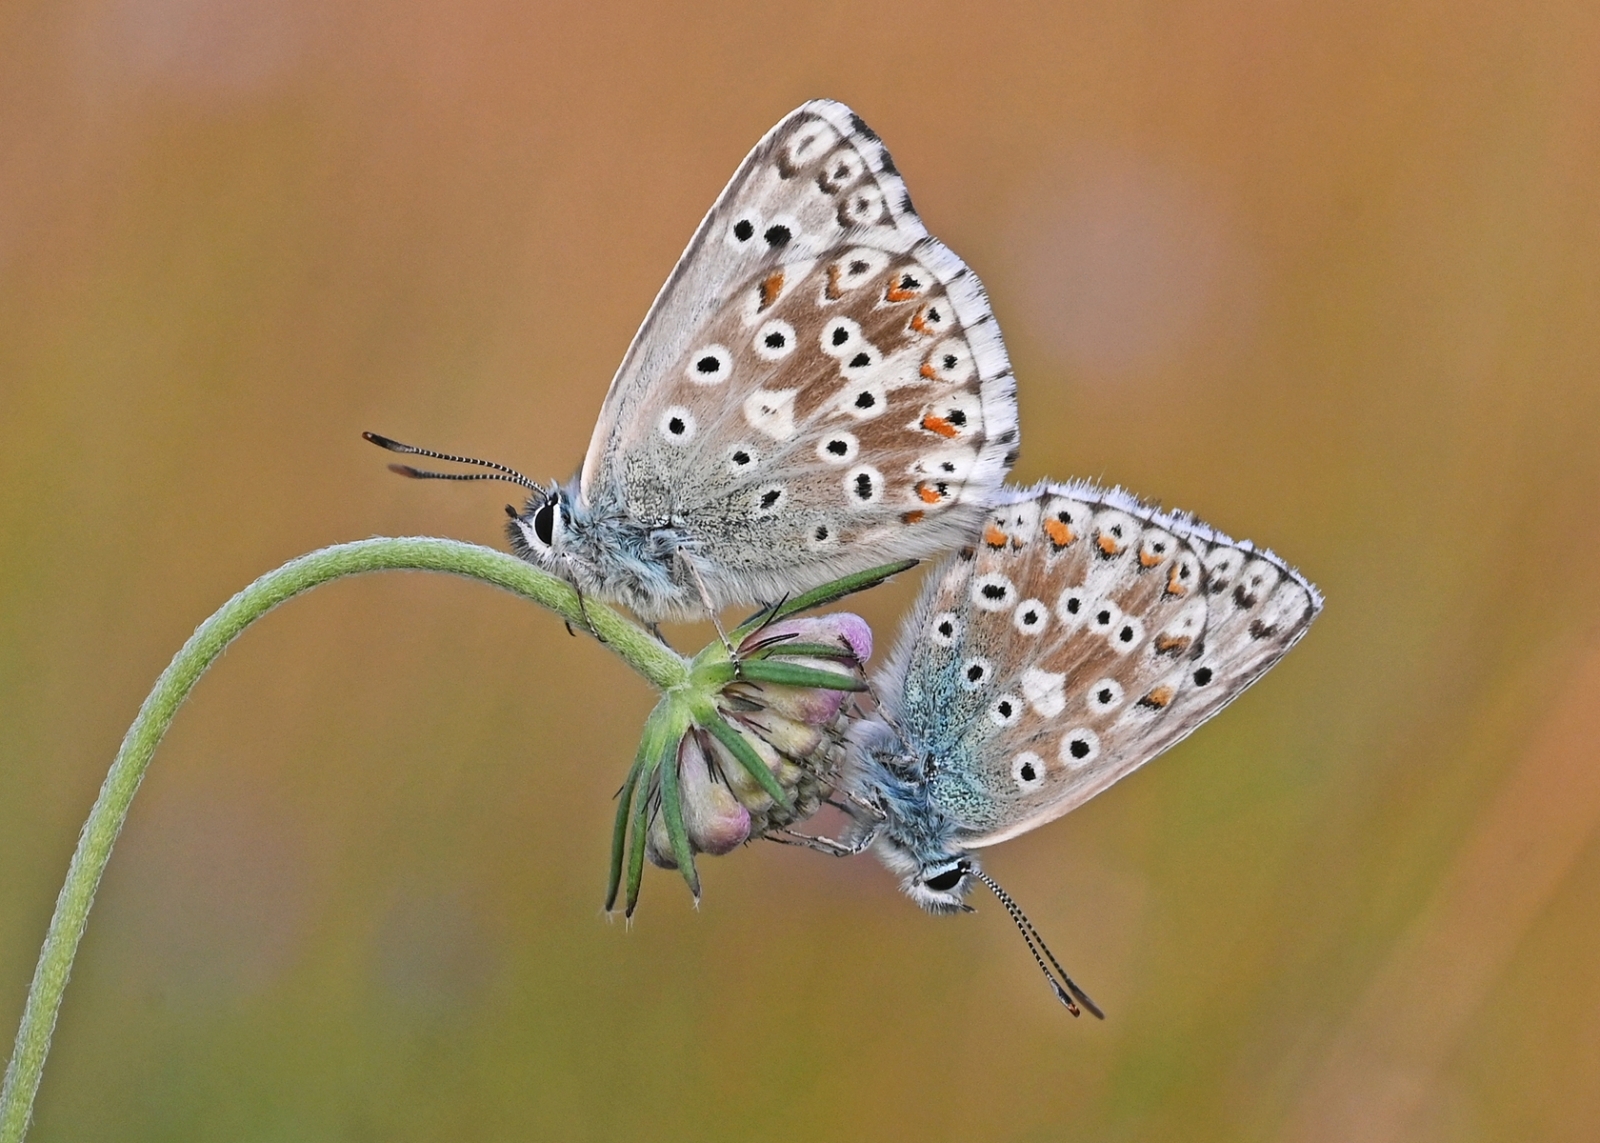 Second: Martin Johnson - Two Male Chalkhill Blue Butterflies